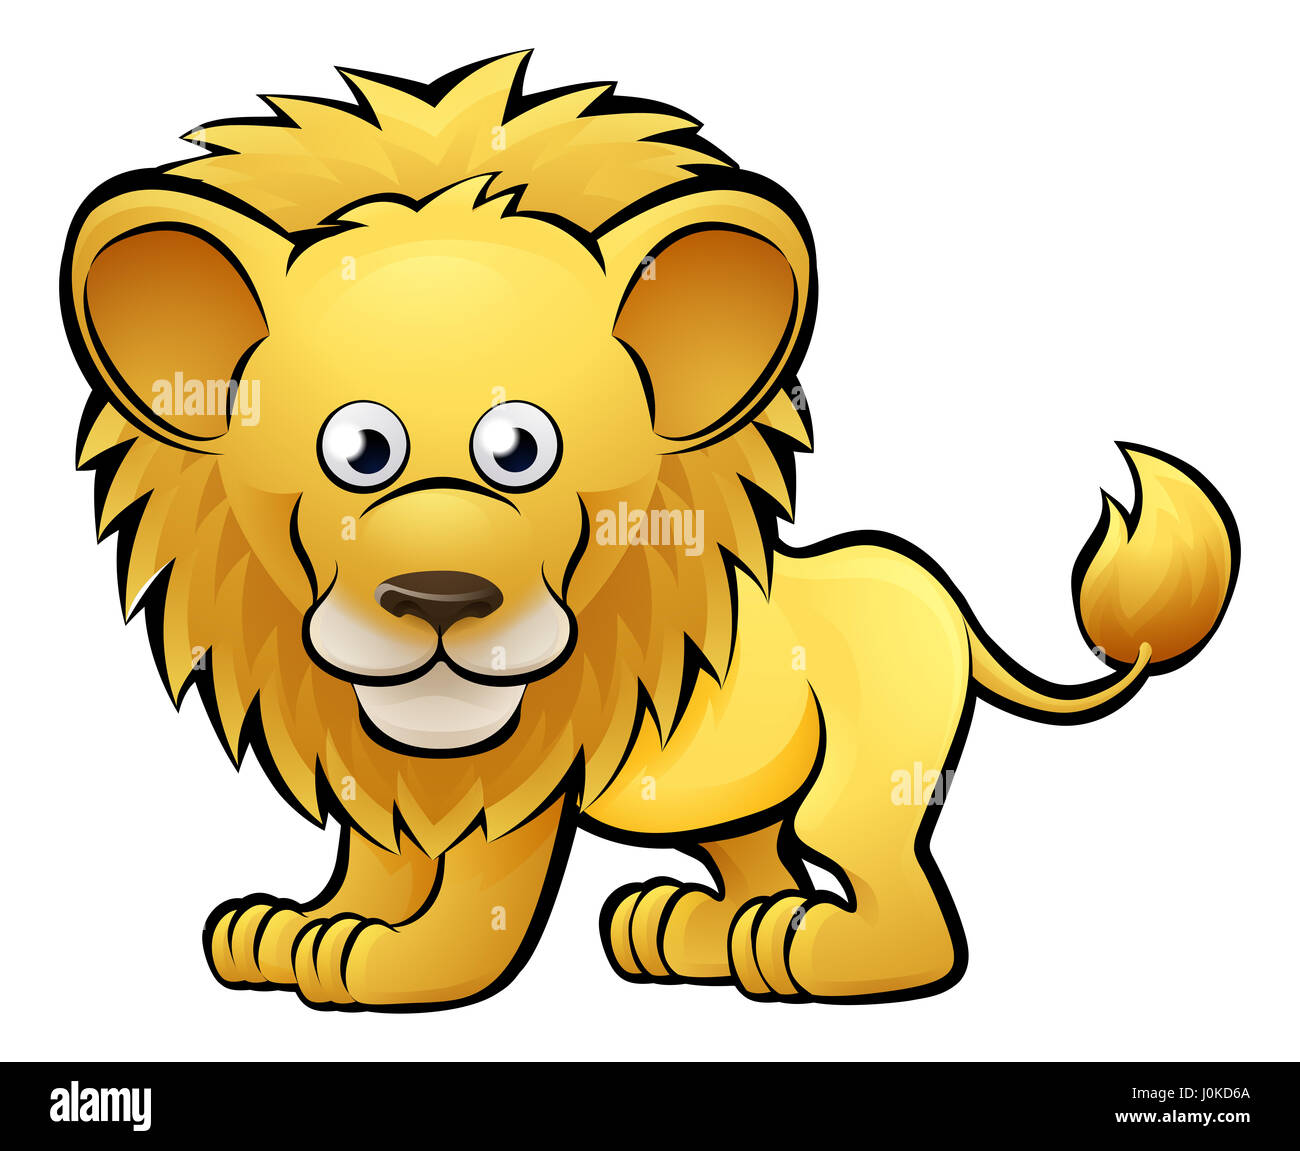 A lion safari animals cartoon character Stock Photo